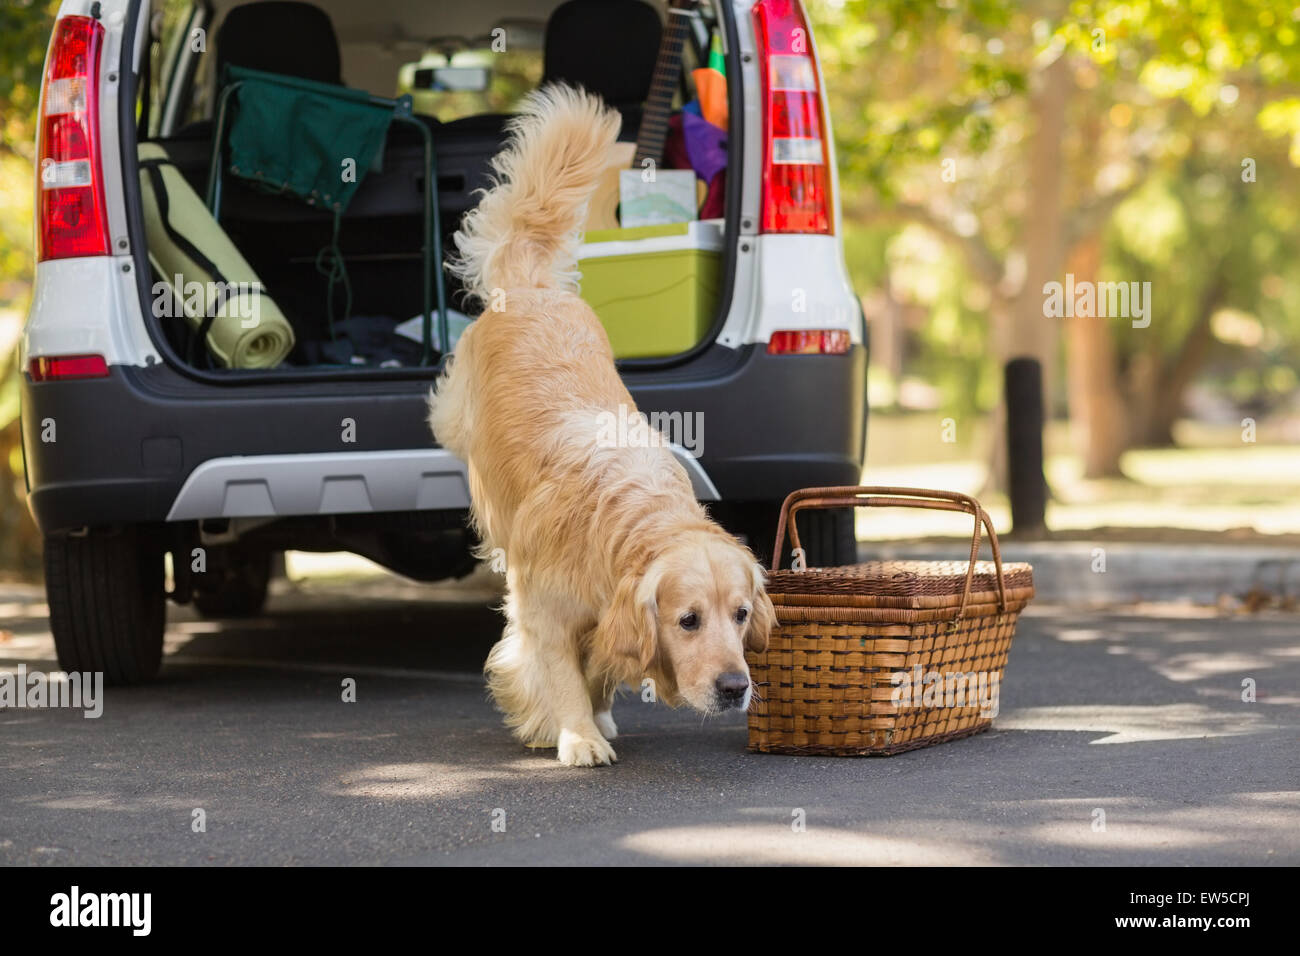 Domestic dog in car trunk Stock Photo